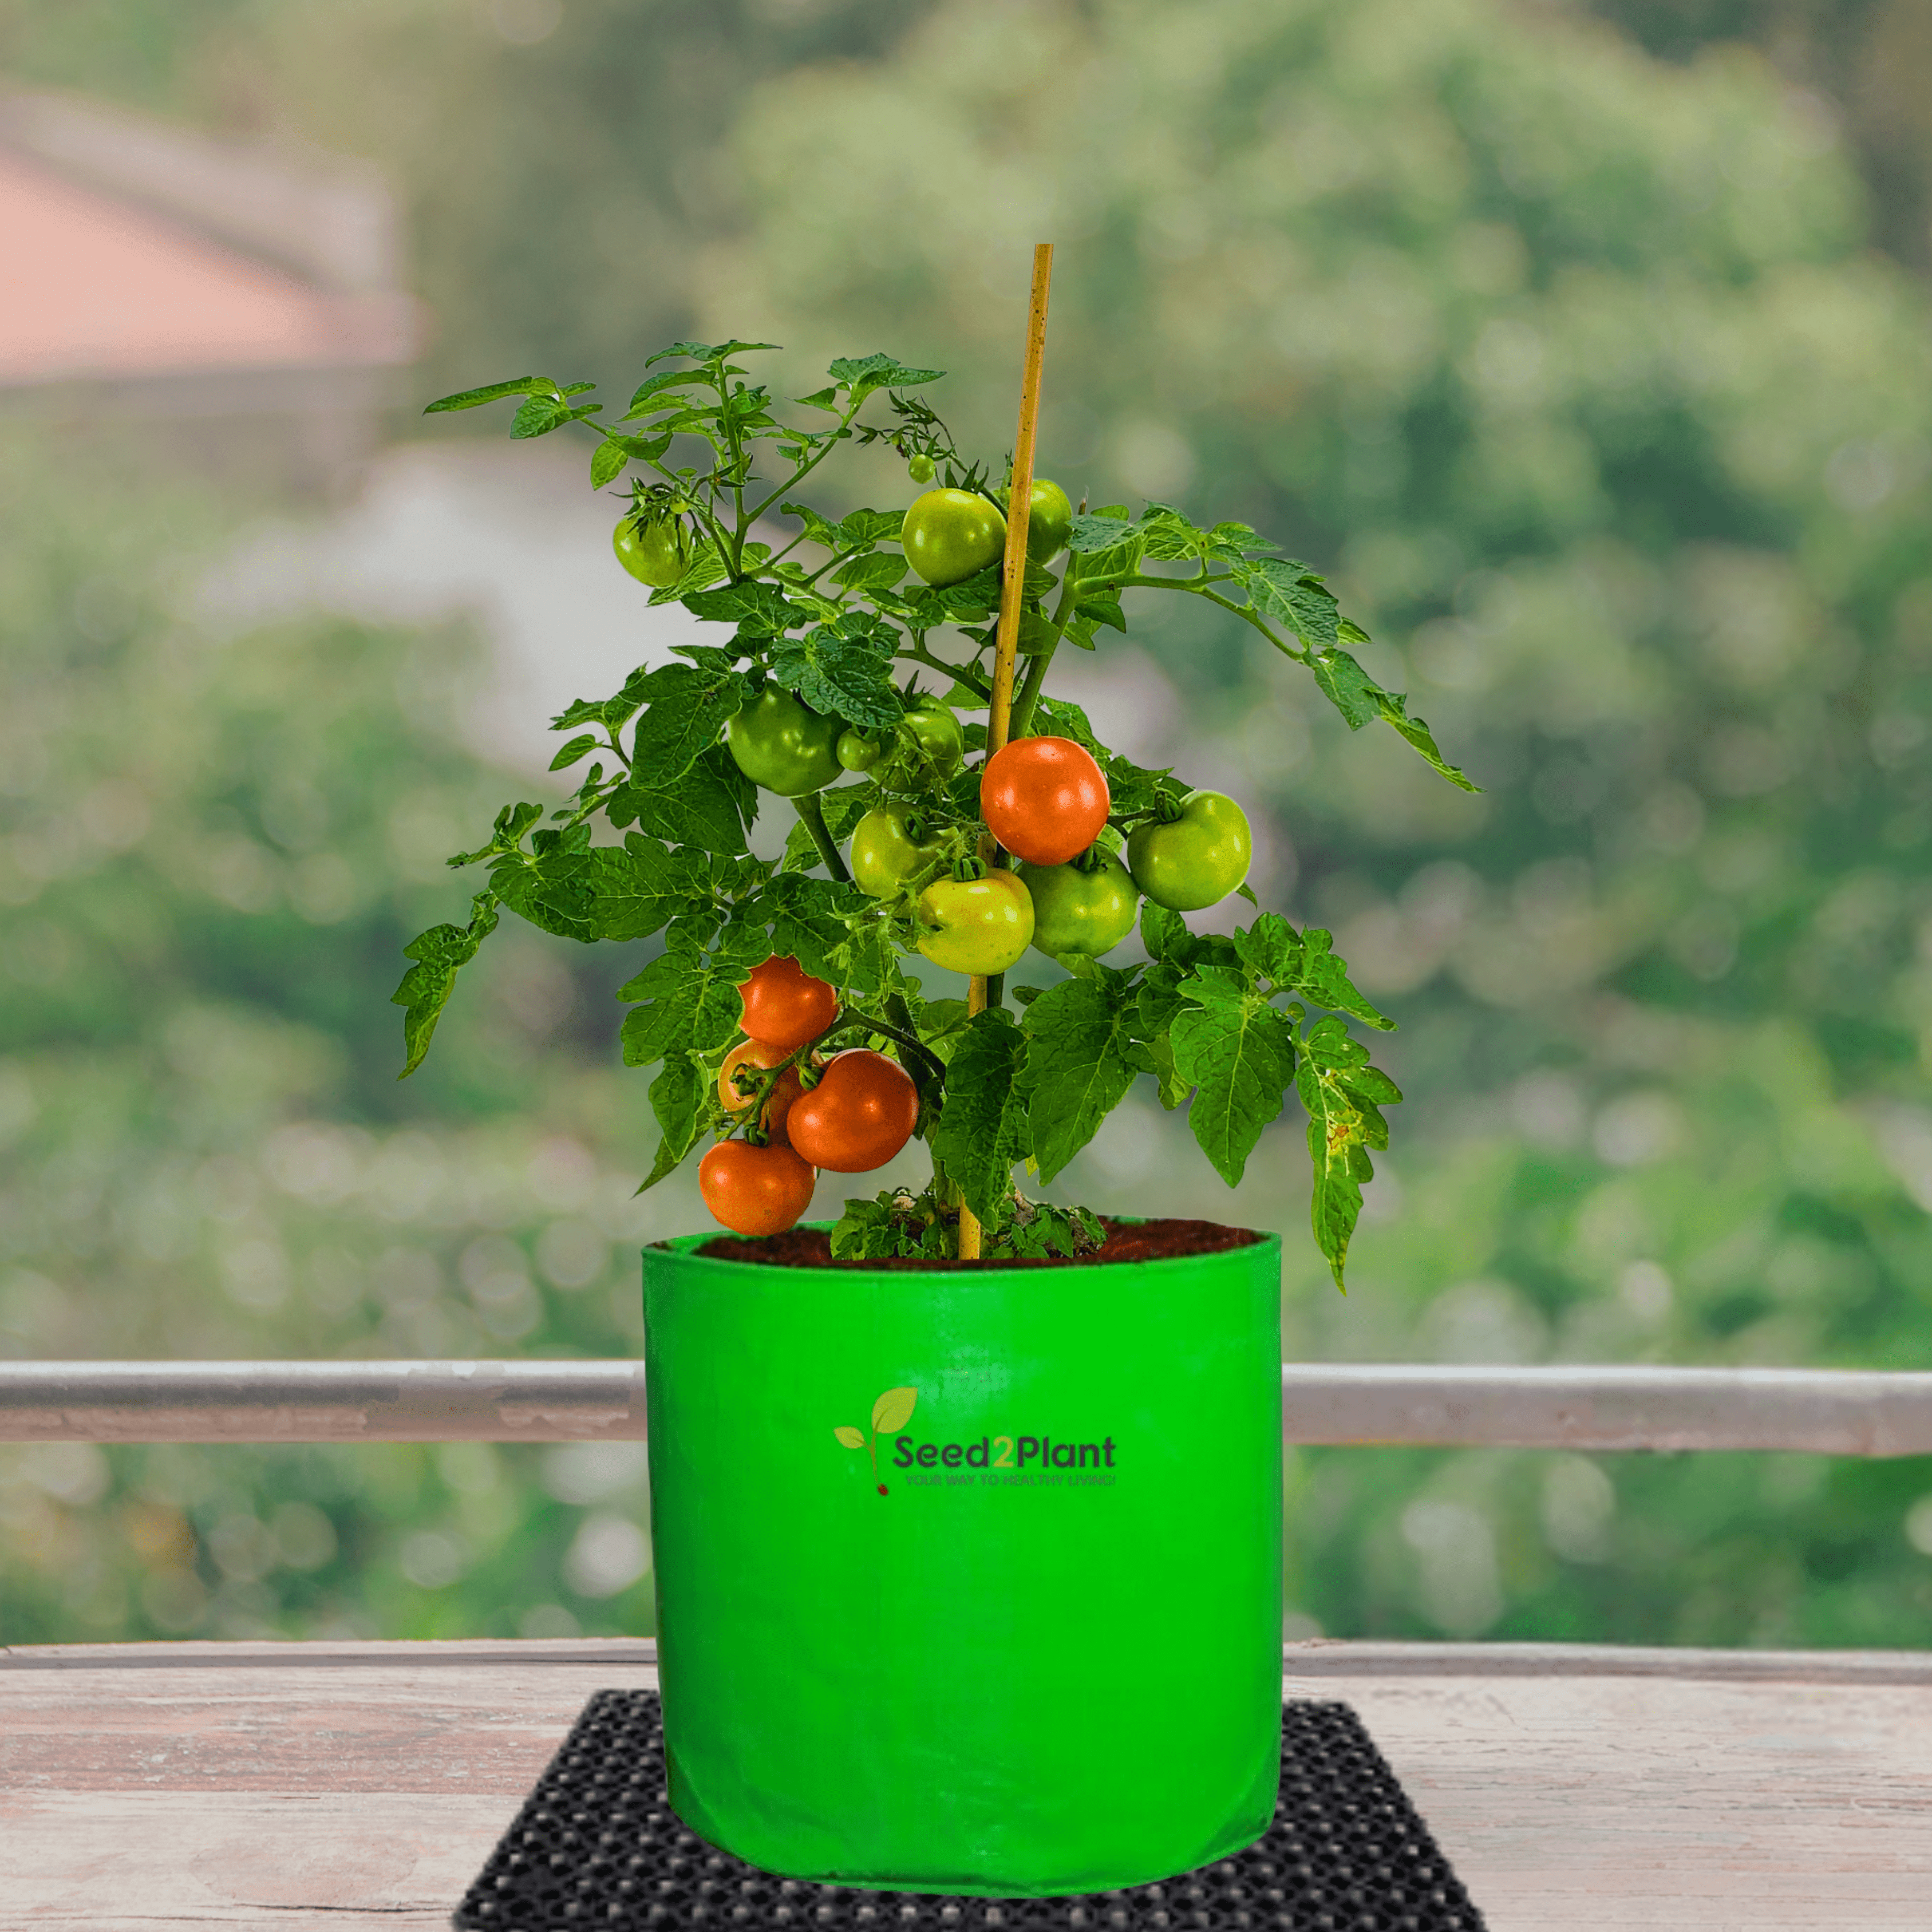 Premium HDPE 15x6 Leafy Grow Bags for Home Garden